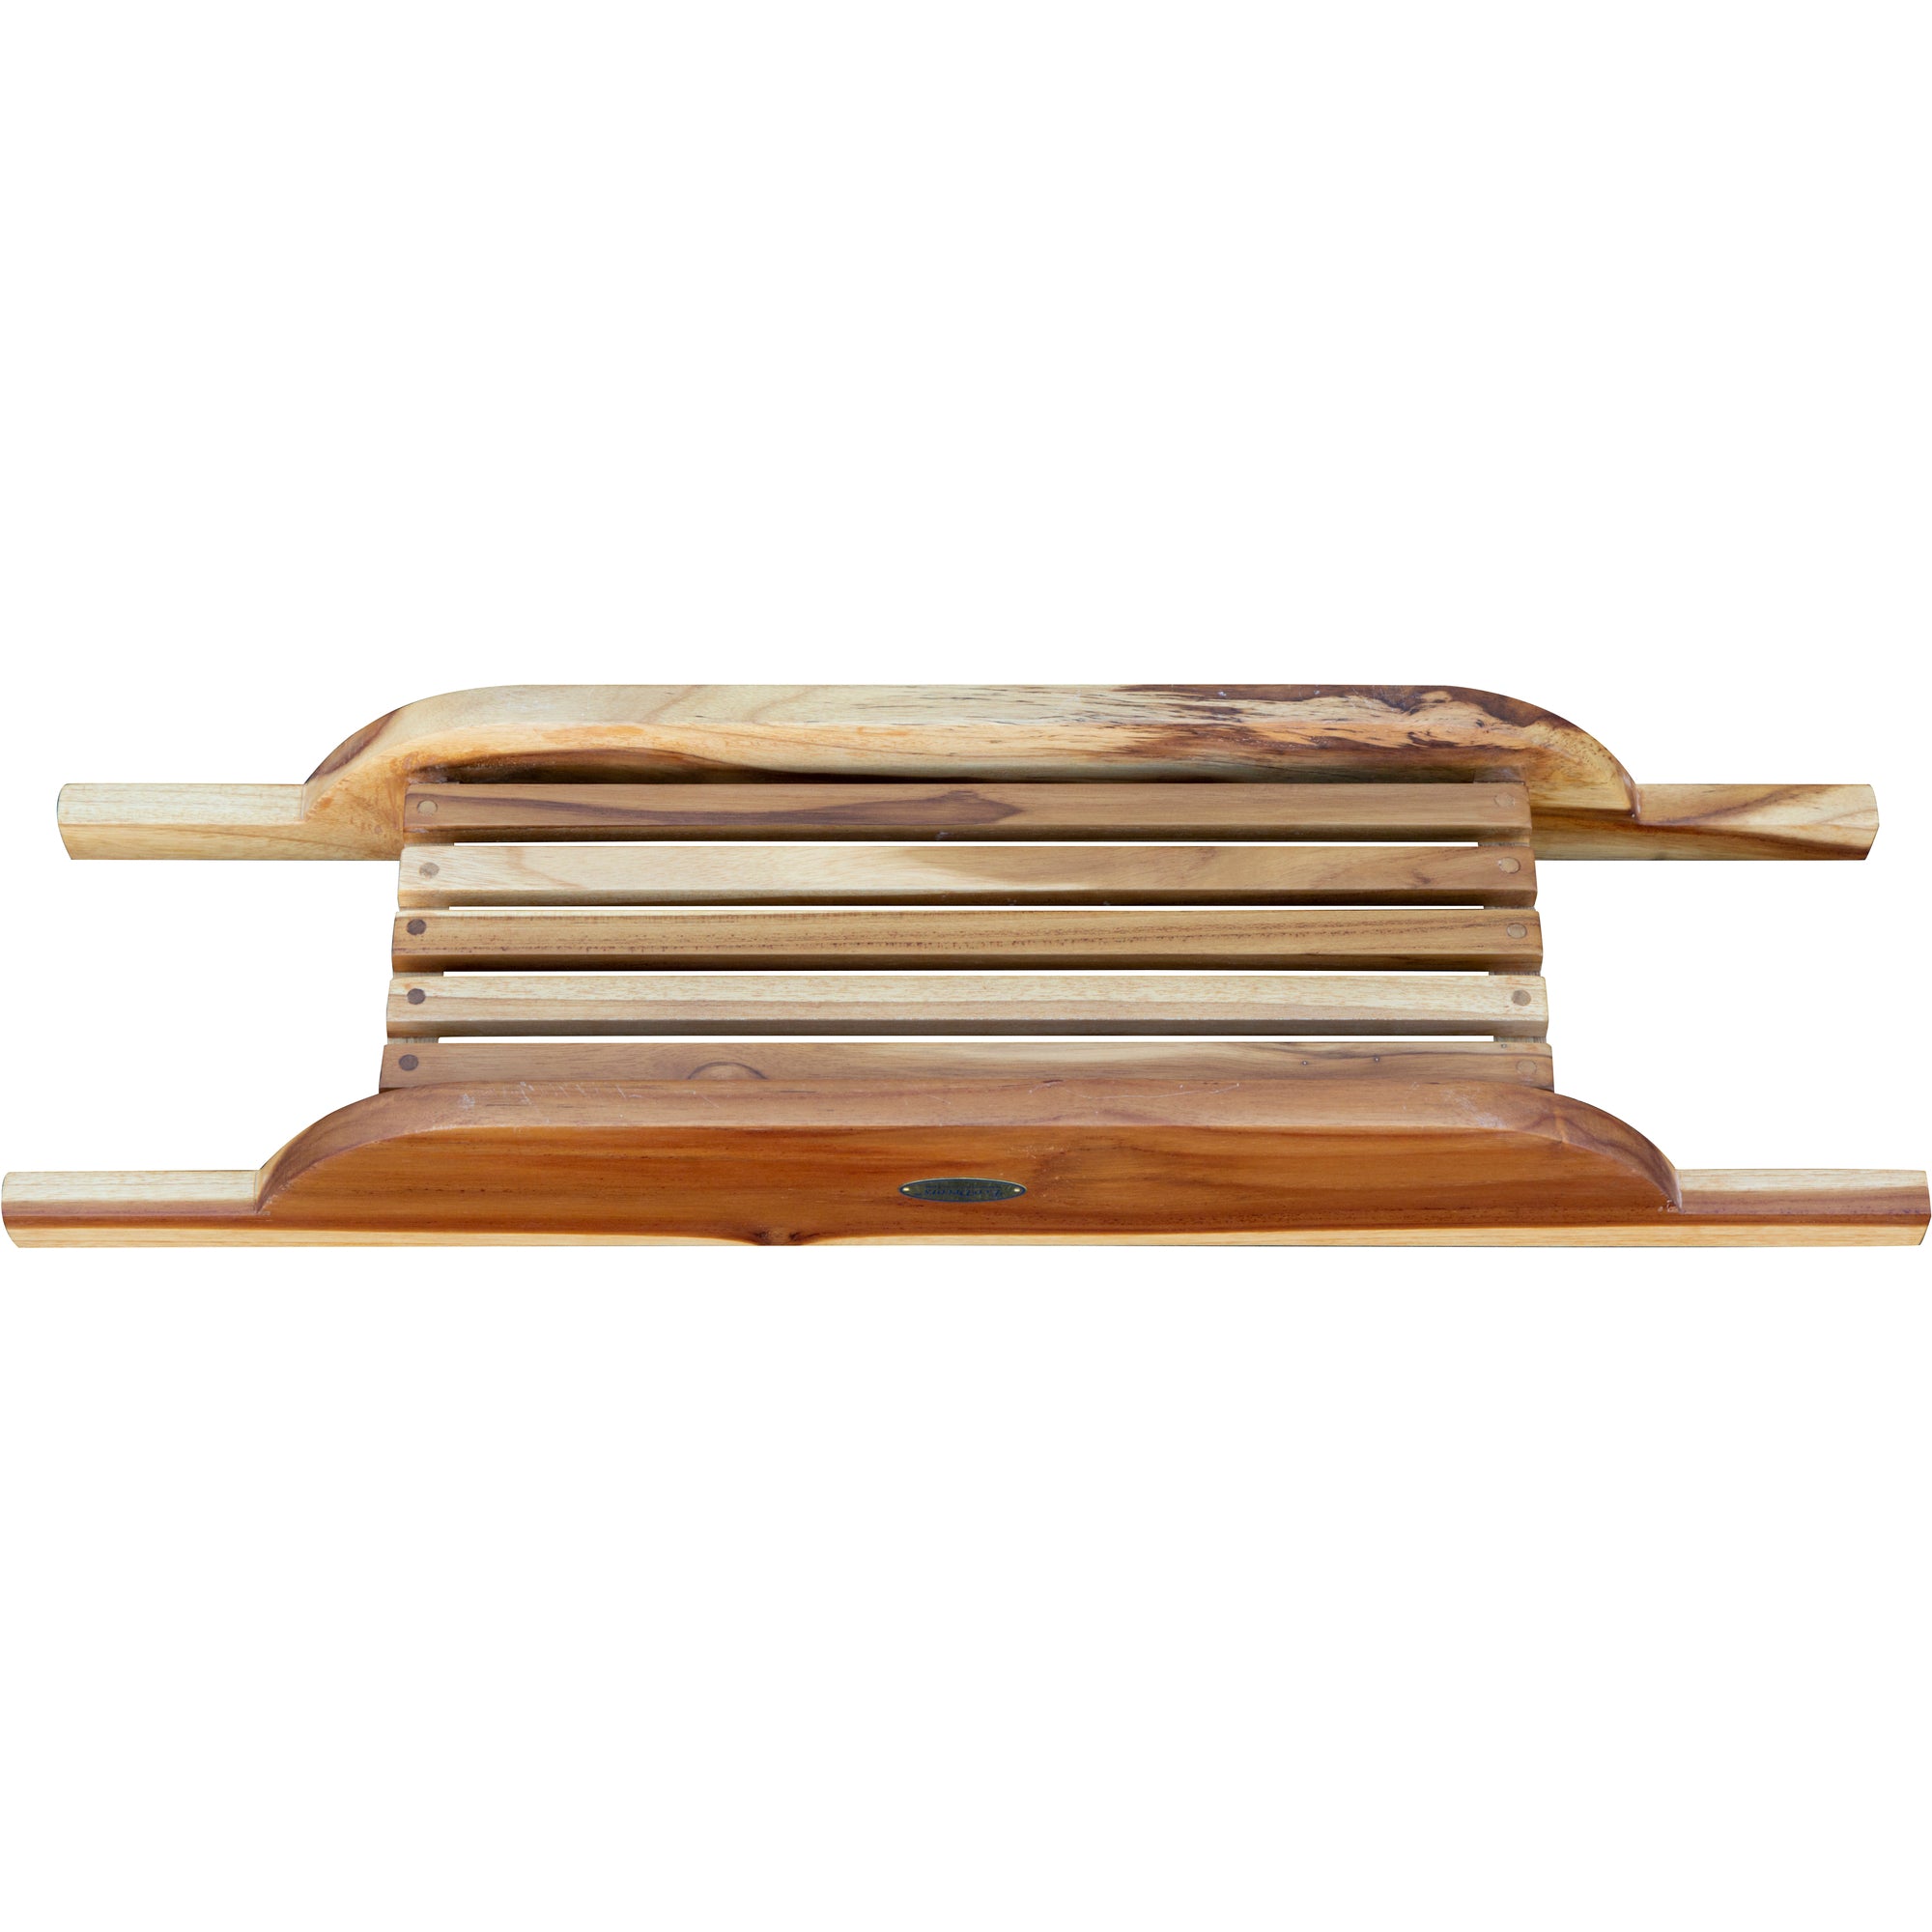 EcoDecors® Eleganto® 29" Teak Wood Bath Caddy in EarthyTeak Finish - The EcoDecors Eleganto 23" x 15" Slatted Solid Teak Bath Floor Mat in EarthyTeak Finish